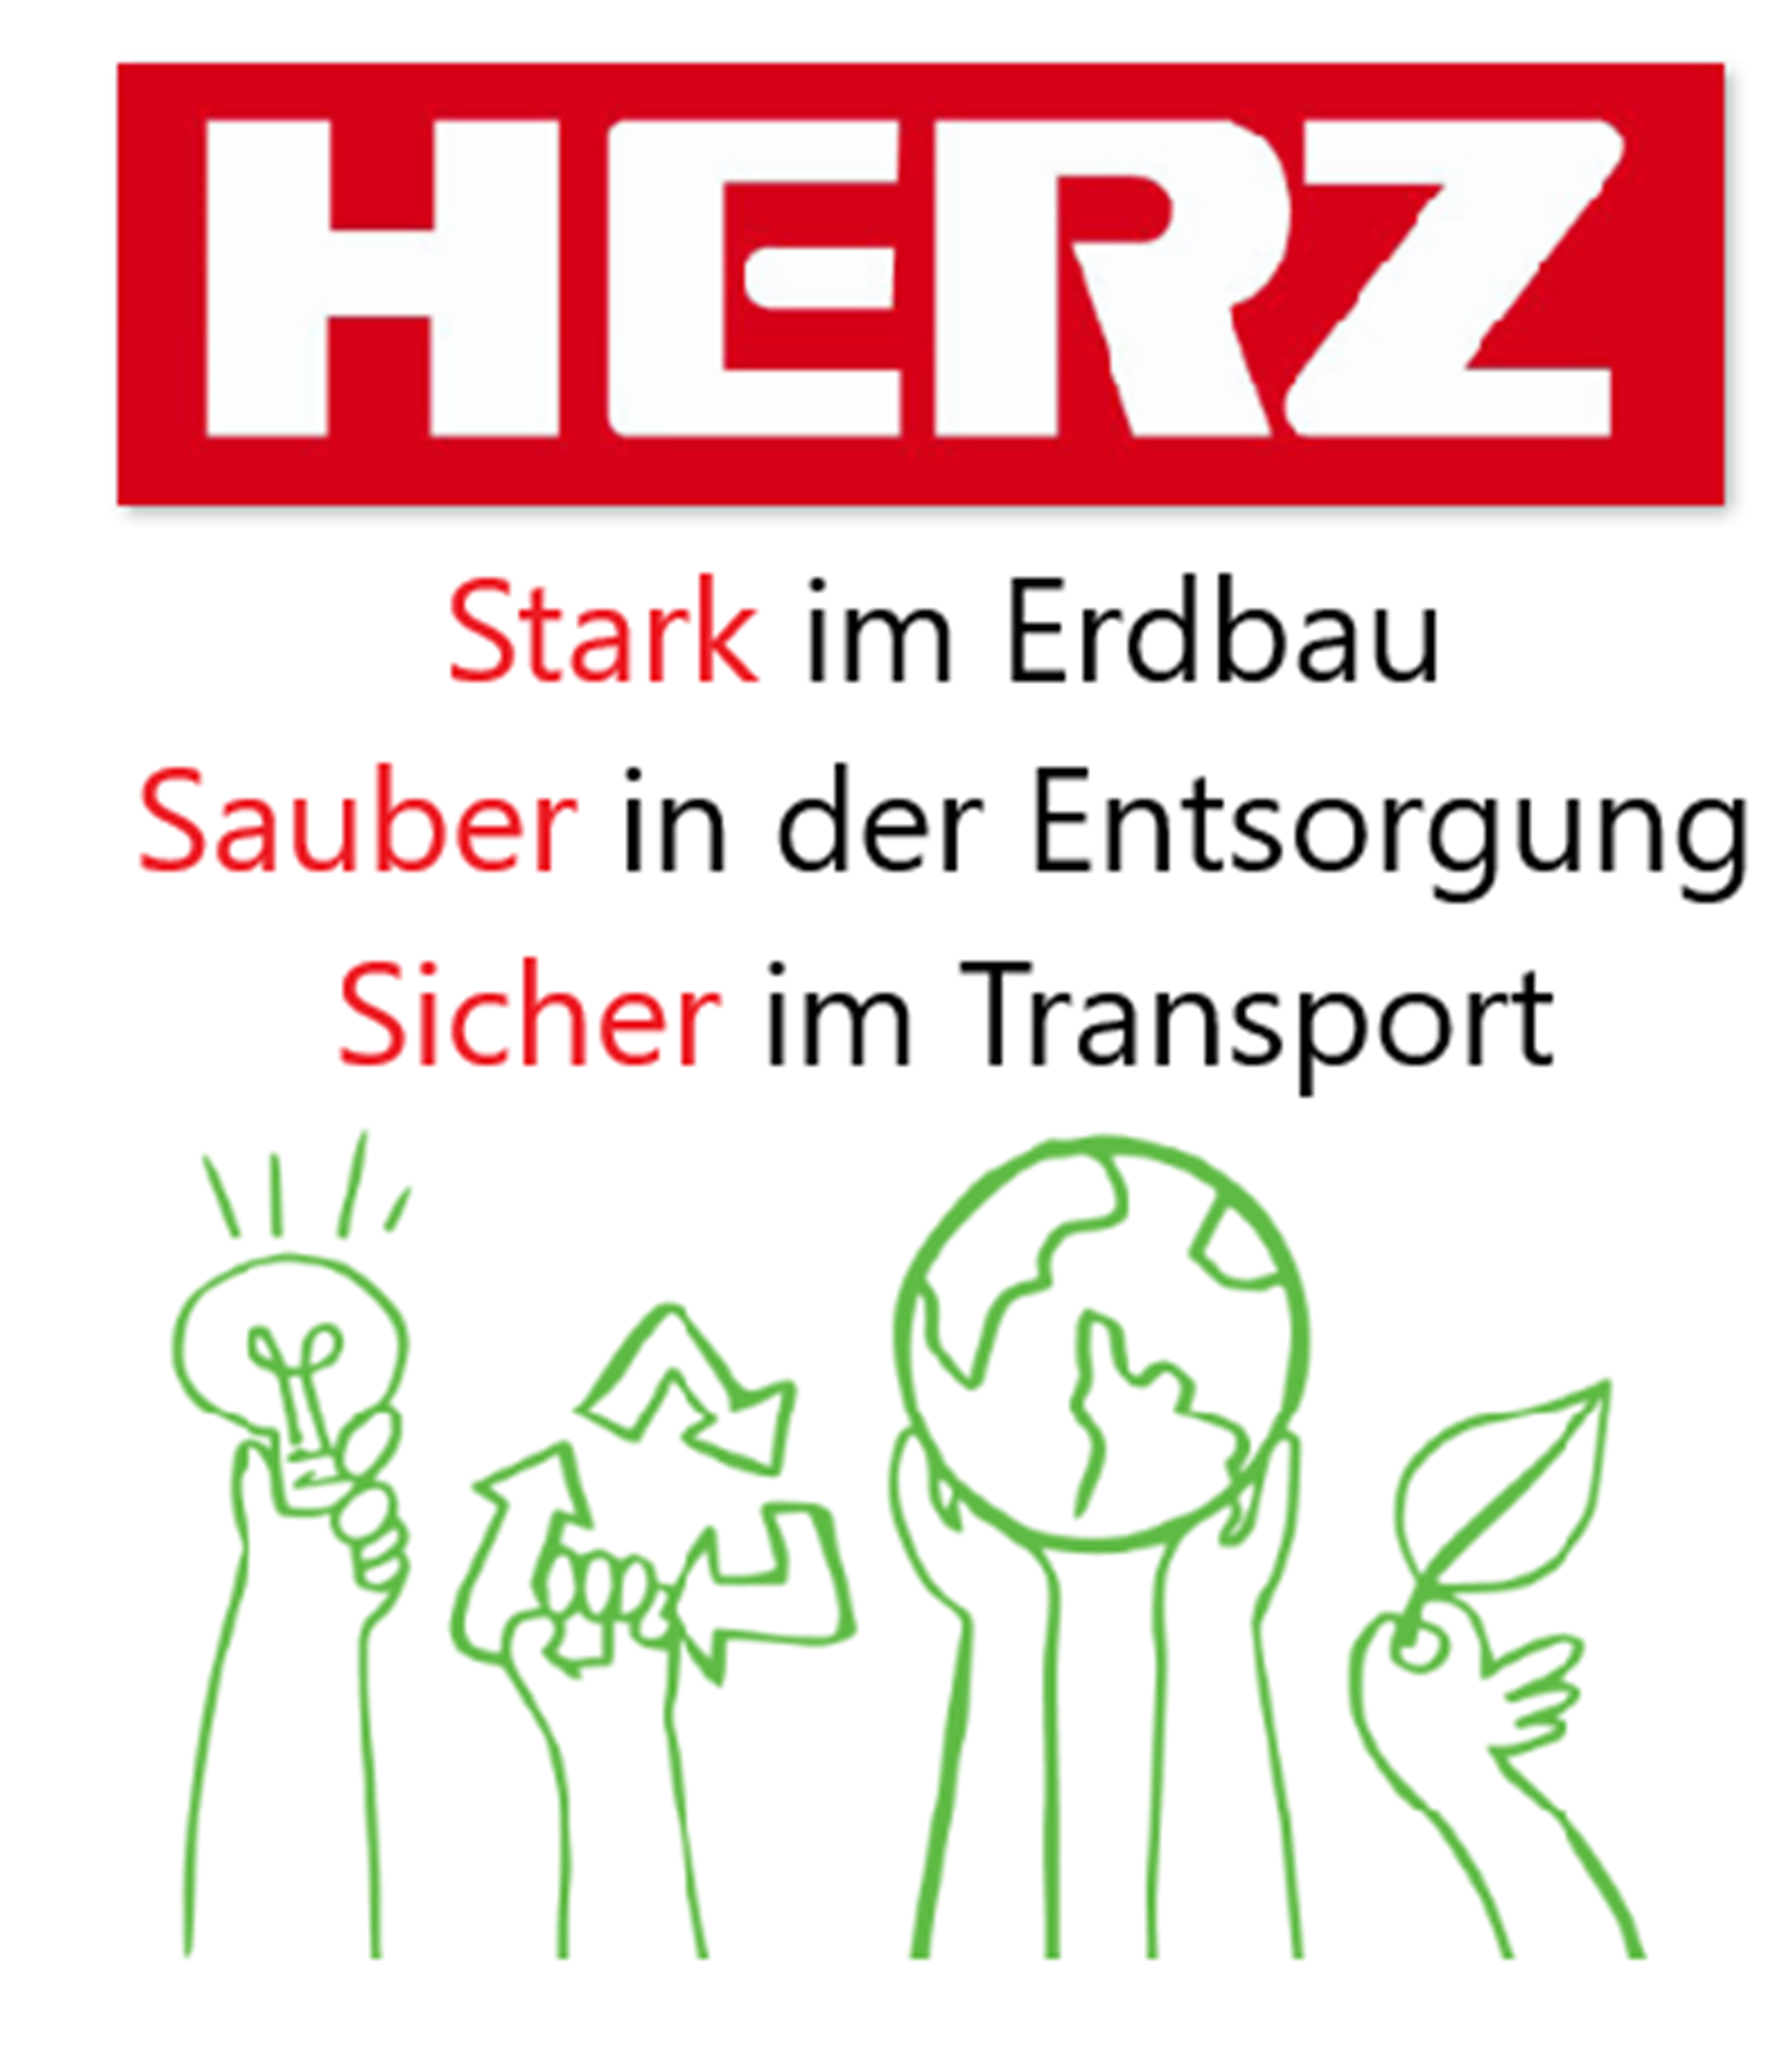 Herz TransporteErdbau GmbH